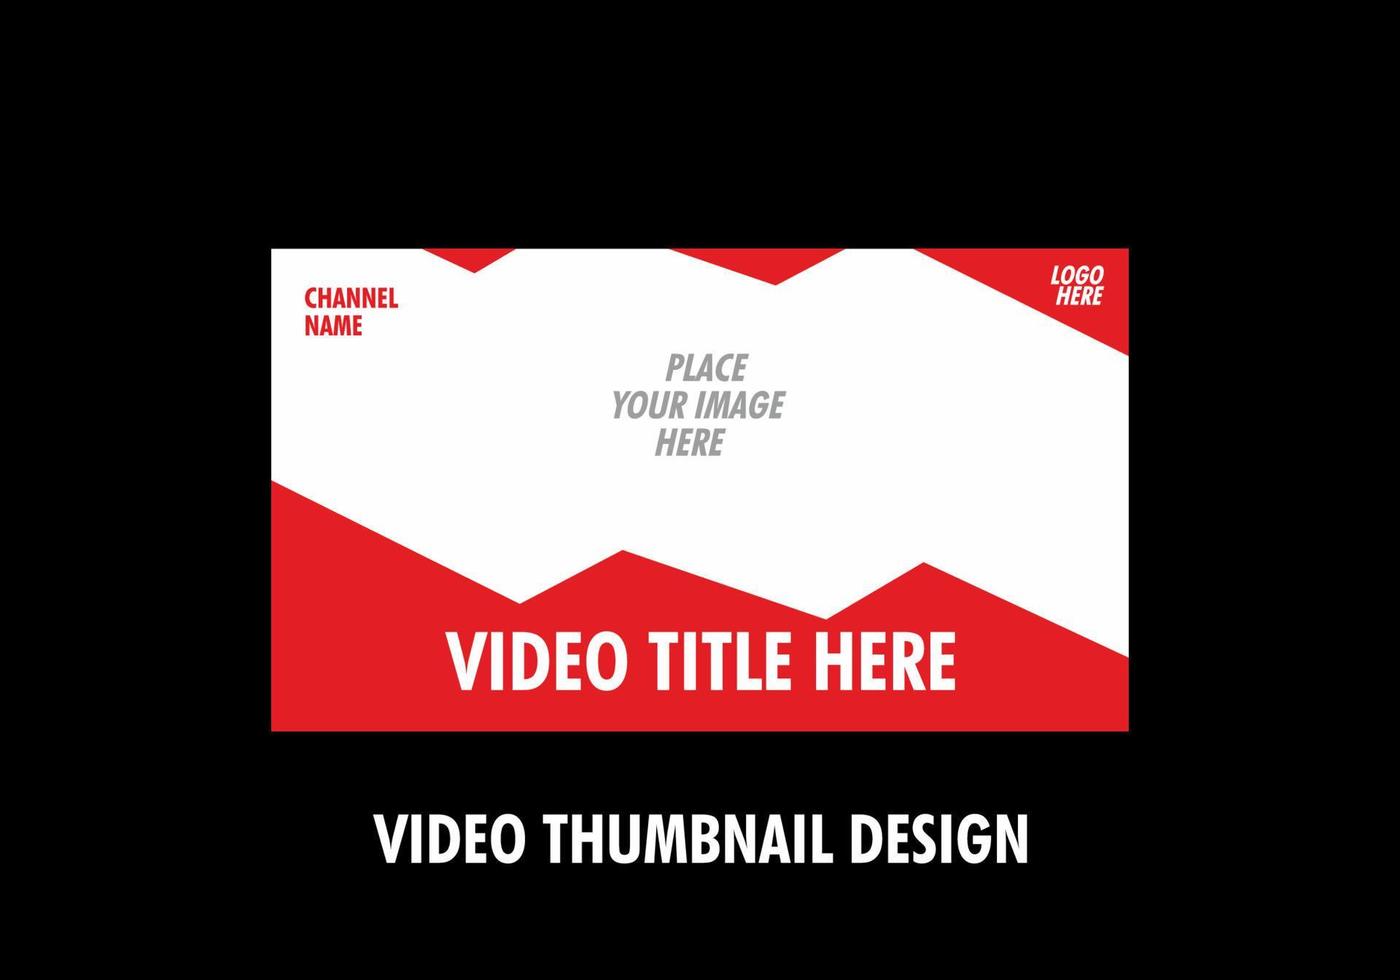 Unique and colorful video thumbnail design vector